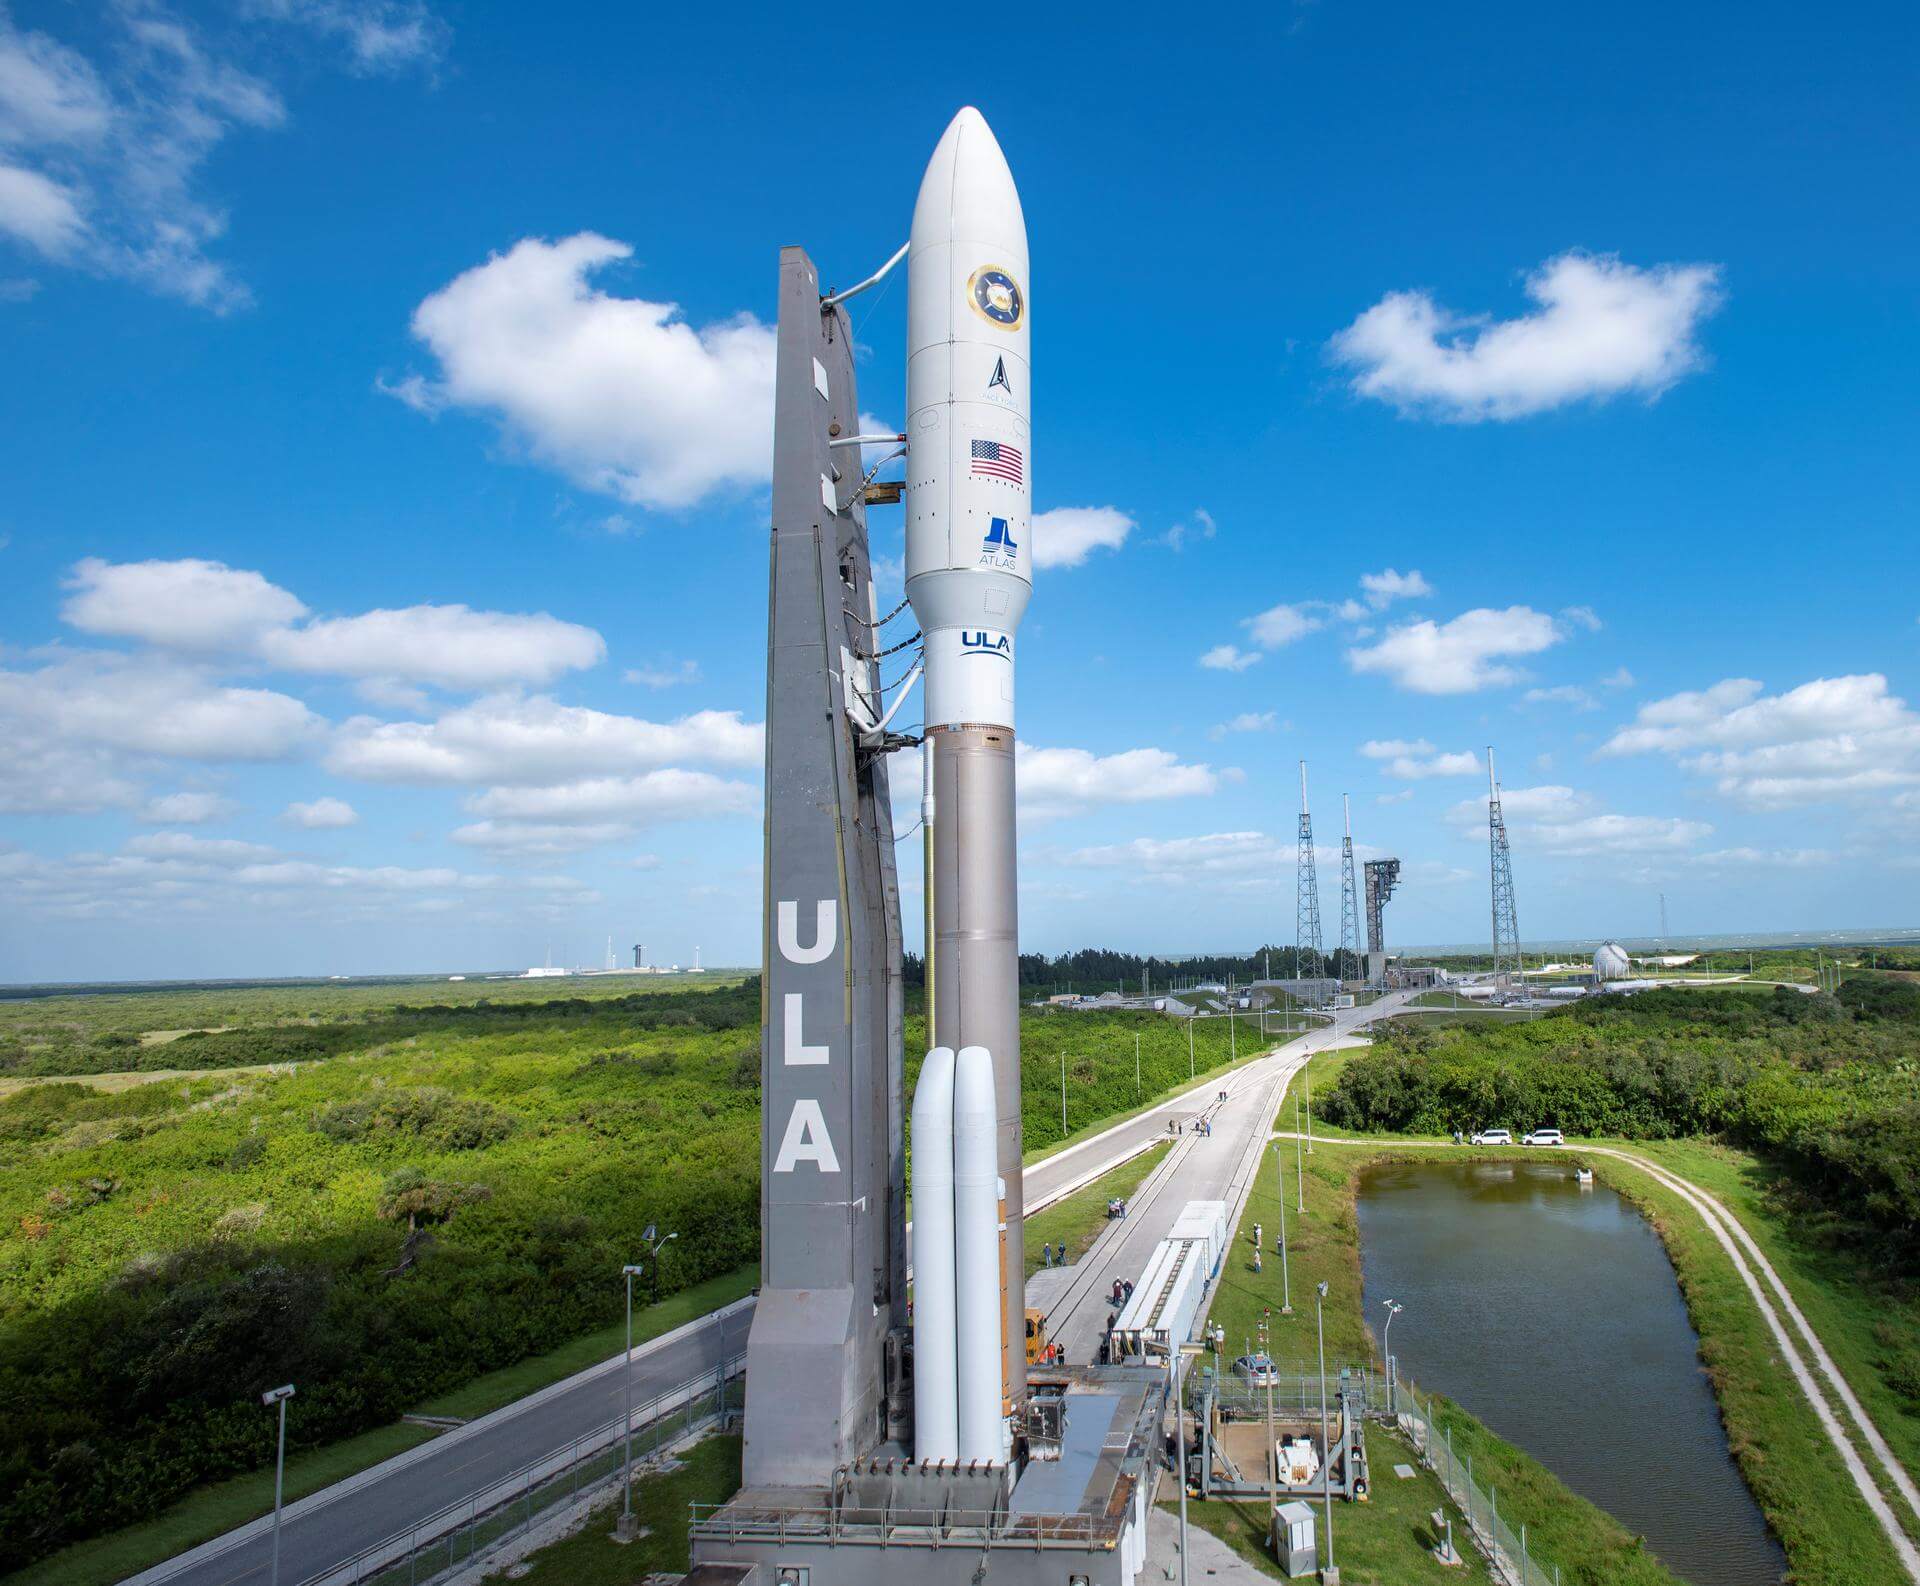 rocket launch schedule 2014